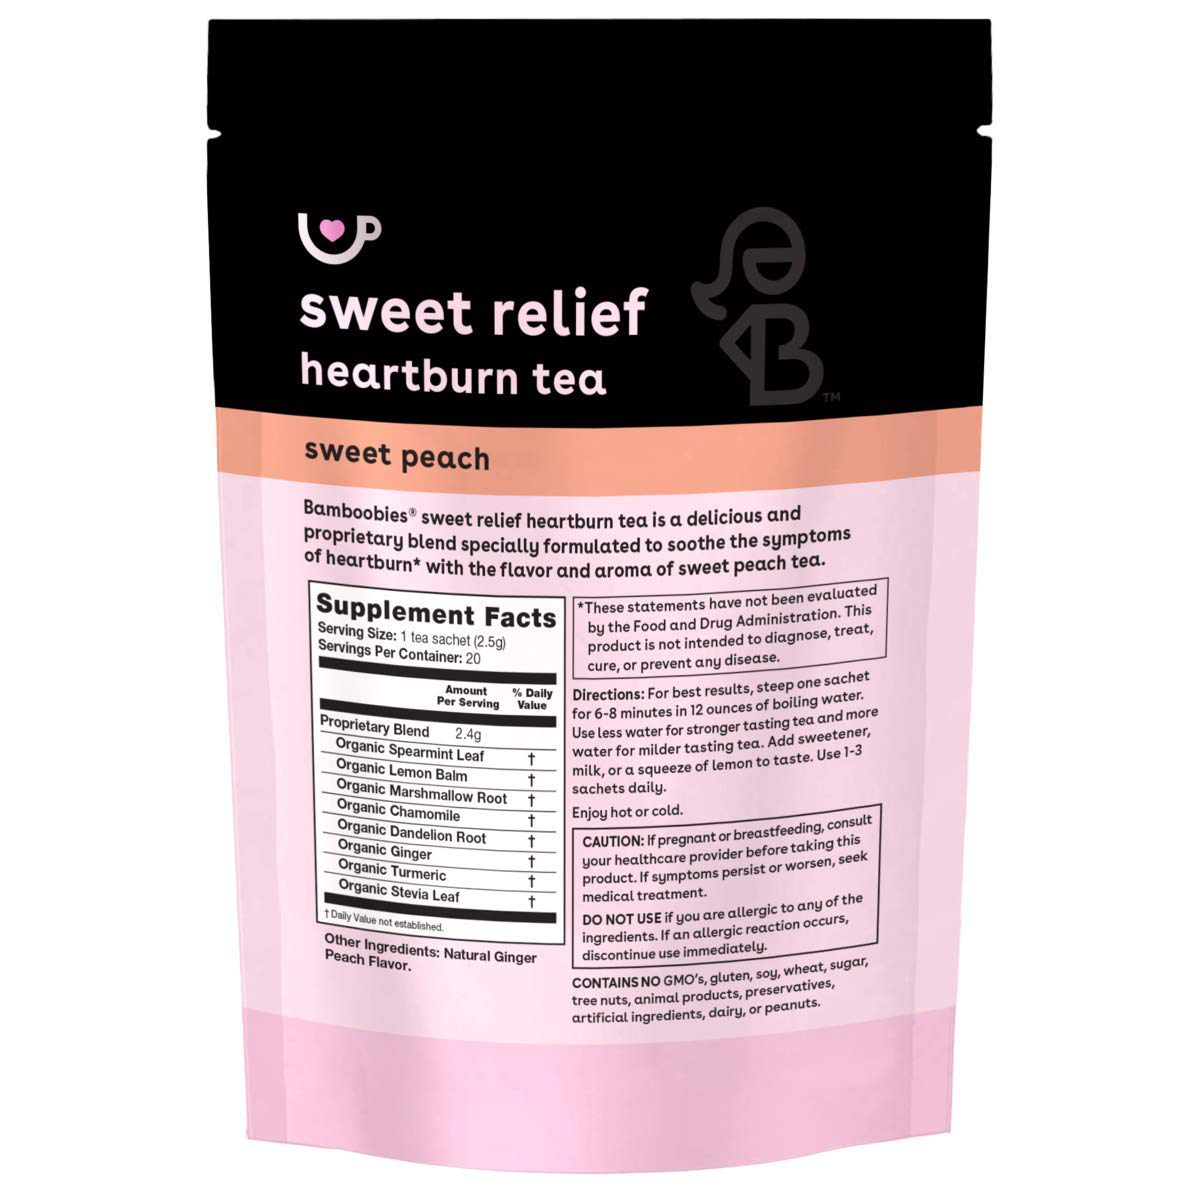 Bamboobies Women's Postpartum Tea, Warm Vanilla, Helps Balance Hormones and Mood, Organic, Non GMO, Caffeine Free, and Sugar Free, 10 Tea Bags